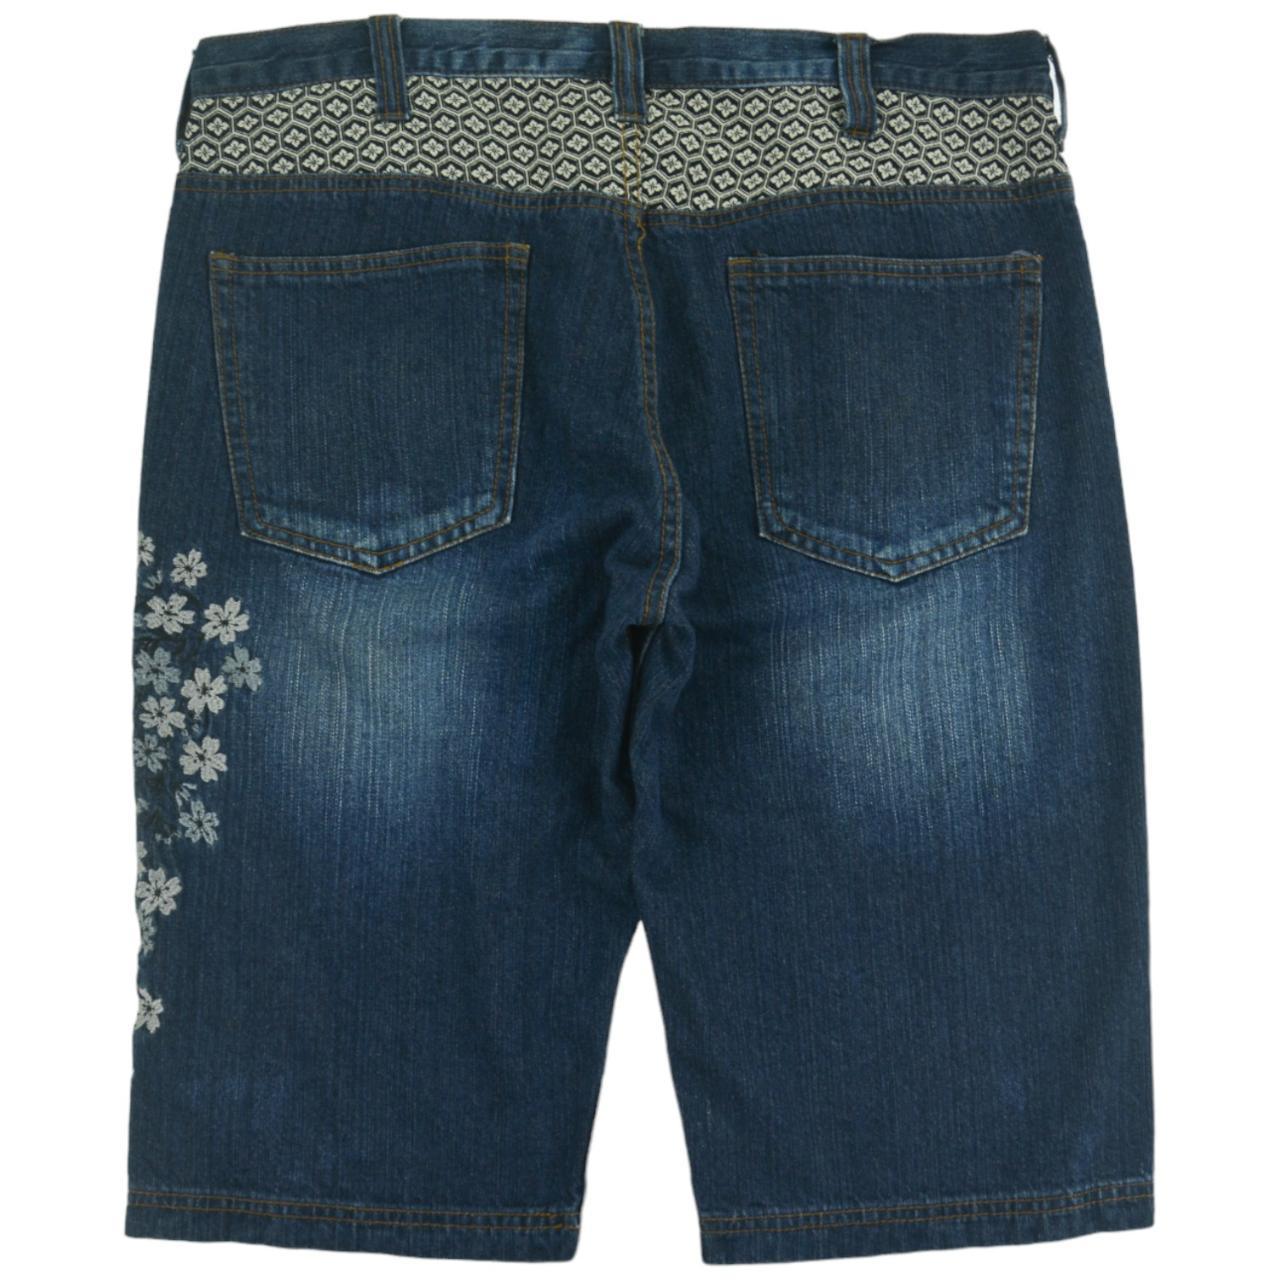 Vintage Flower Japanese Denim Shorts Size W38 - Known Source